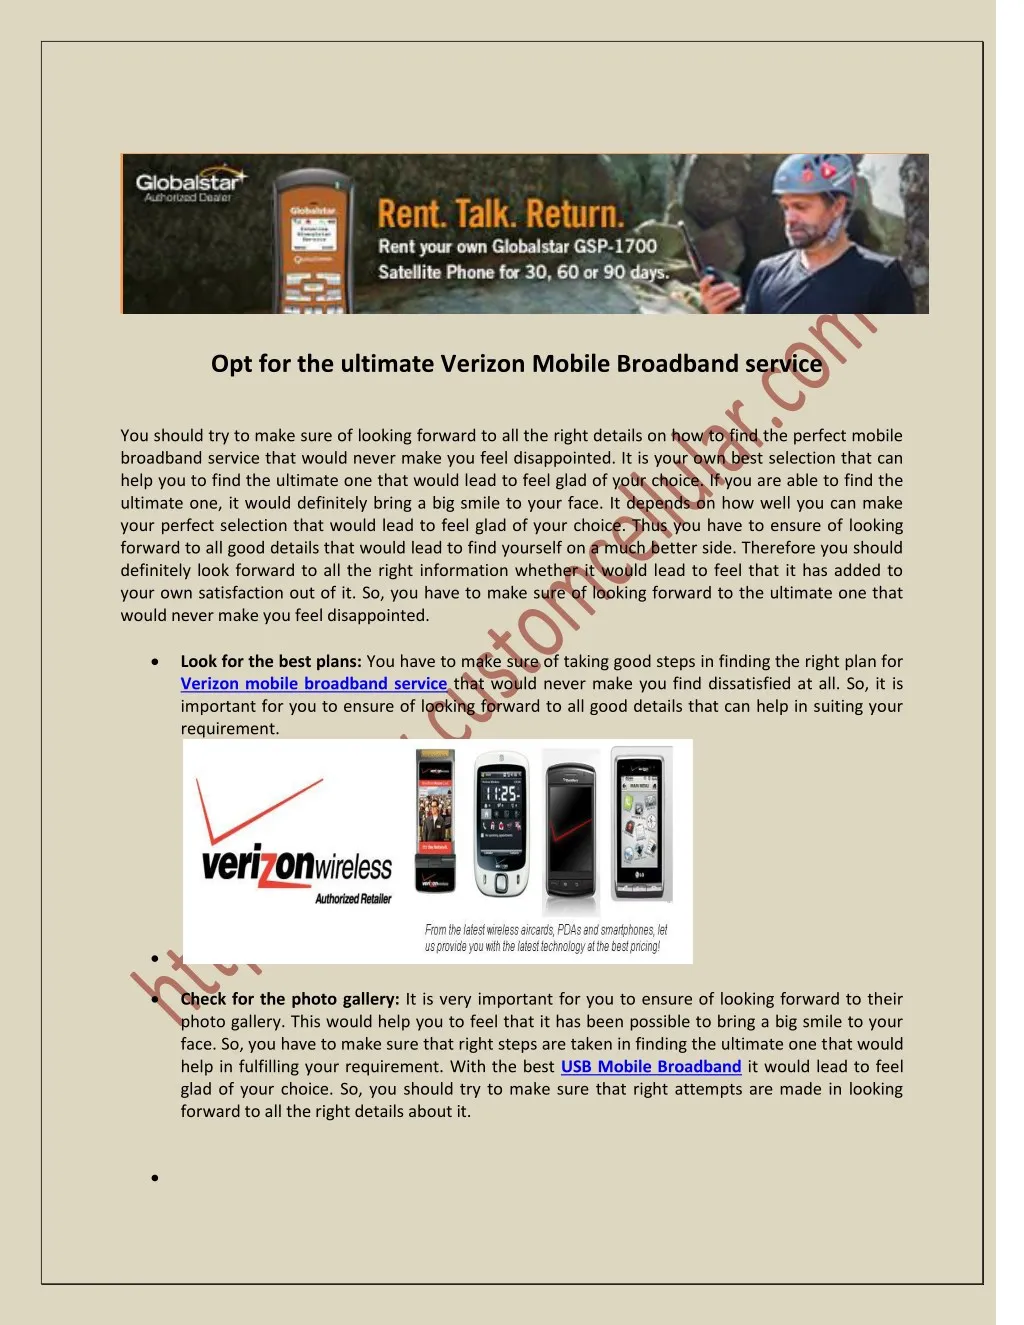 opt for the ultimate verizon mobile broadband